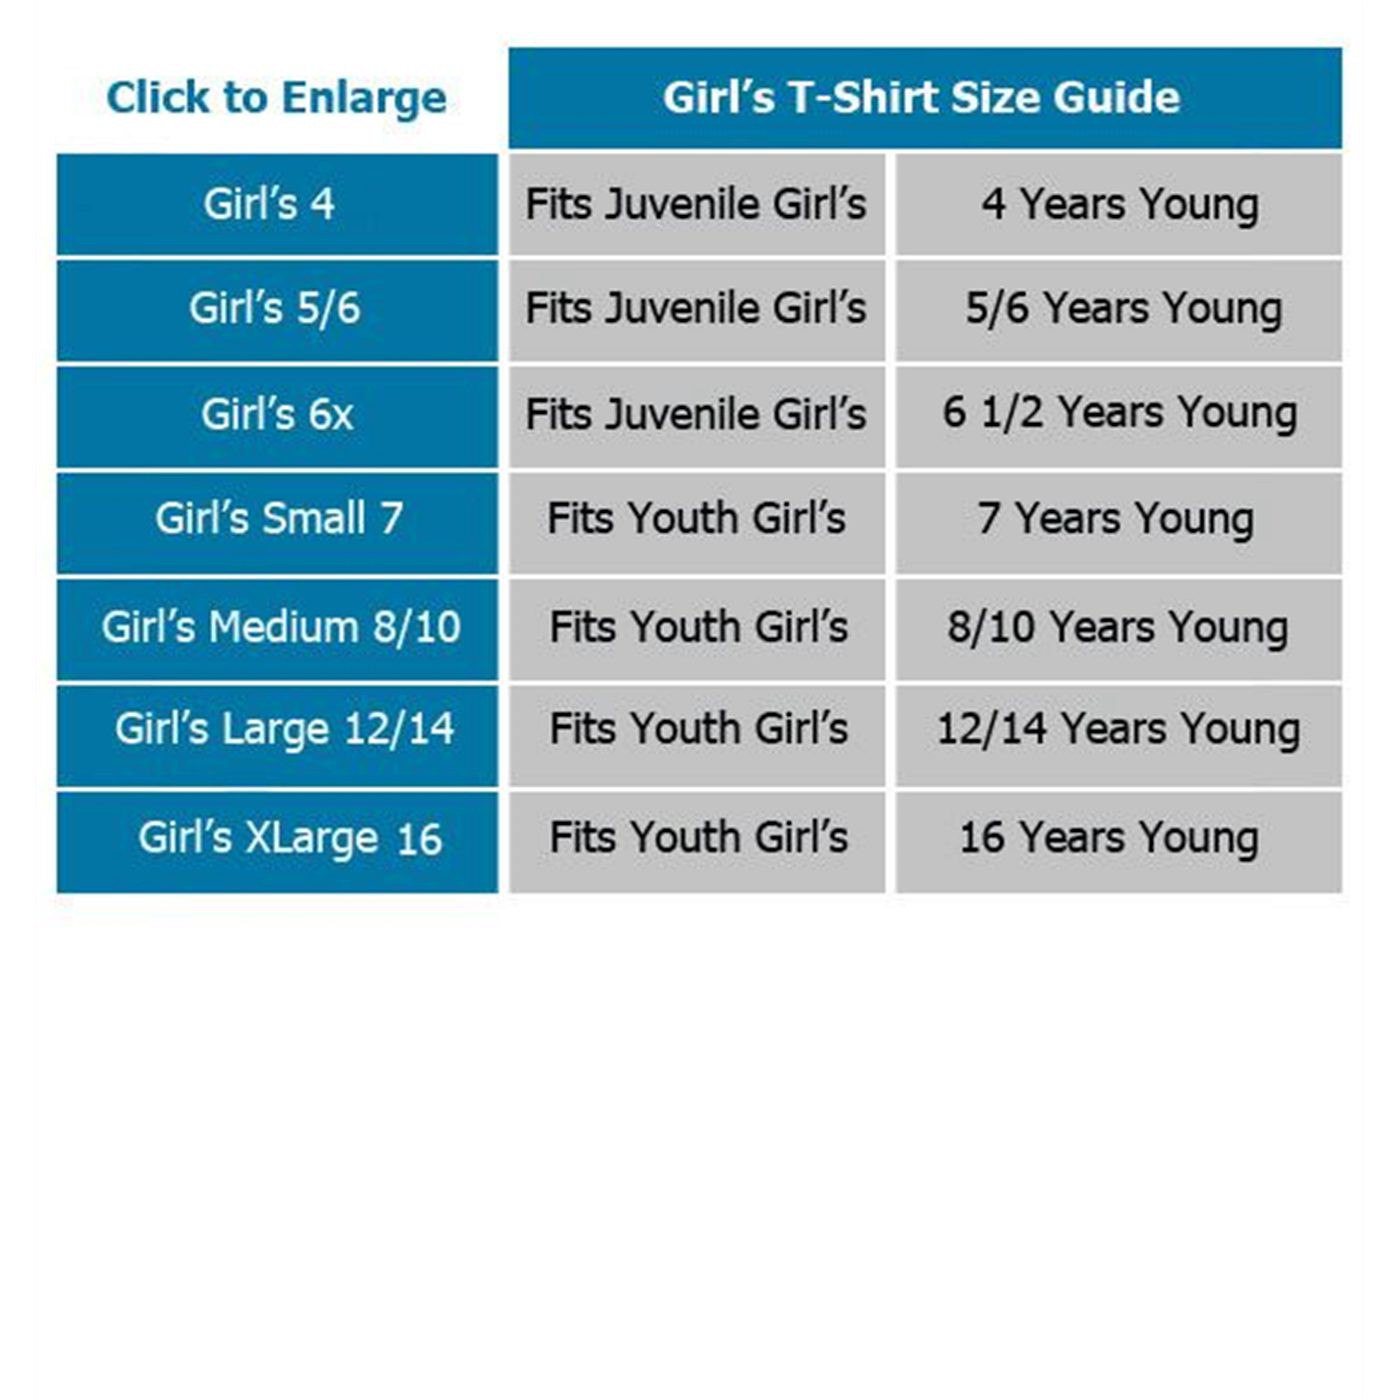 TMNT Heads Girls Youth T-Shirt